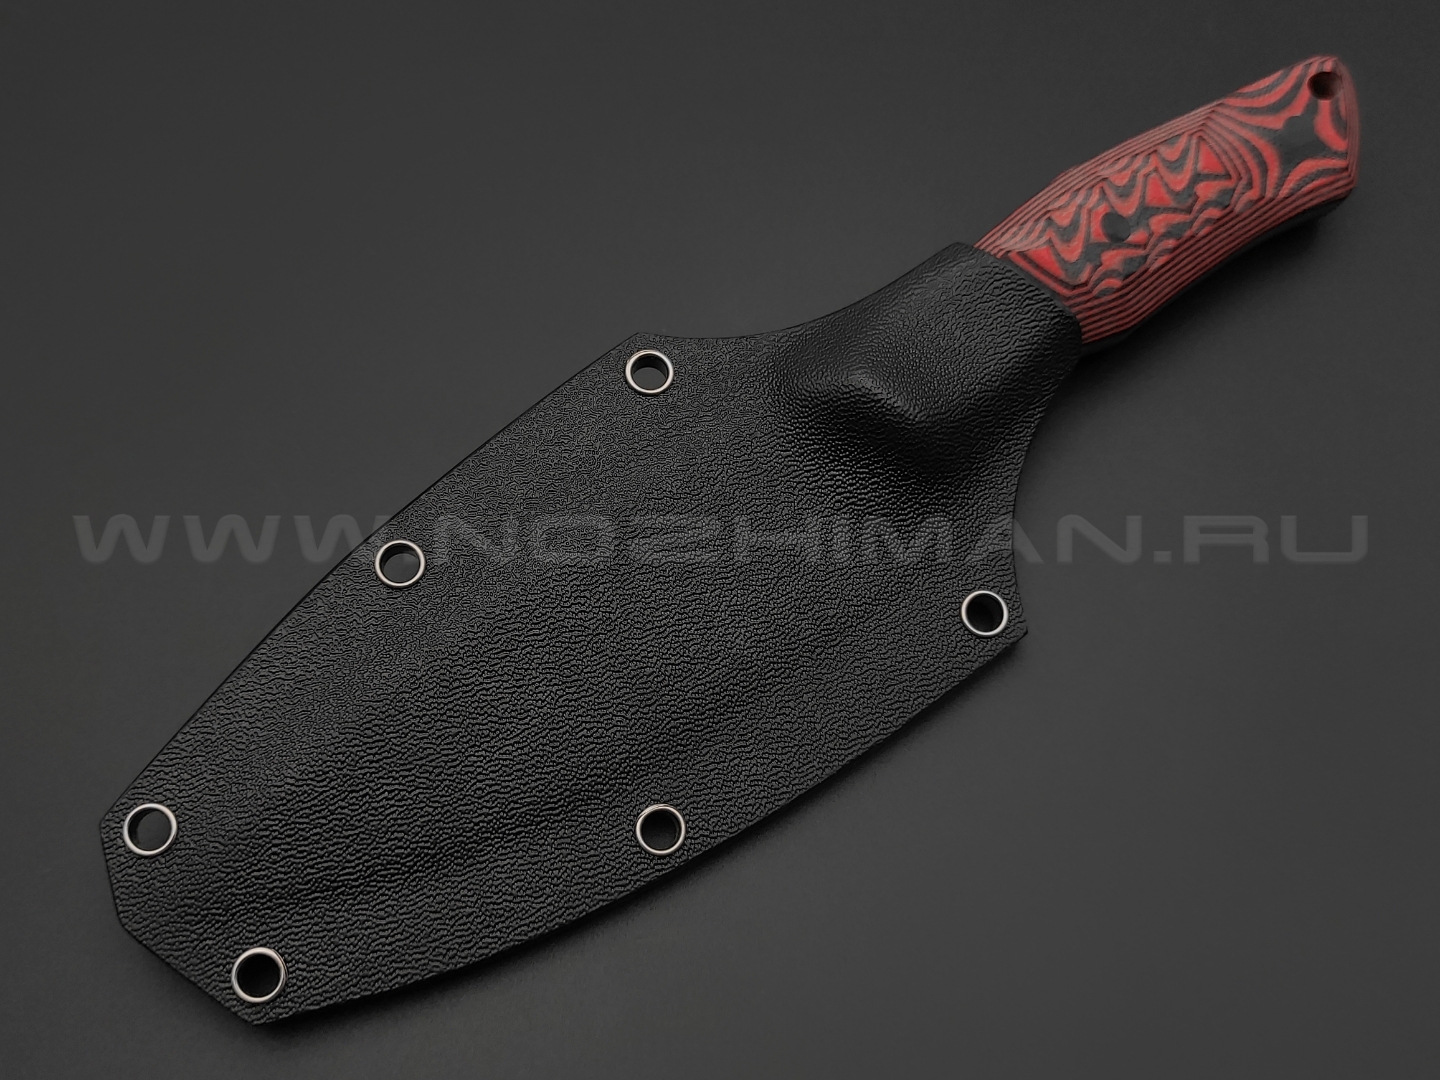 Neyris Knives нож Химера сталь N690 травление, рукоять G10 black & red, пины карбон